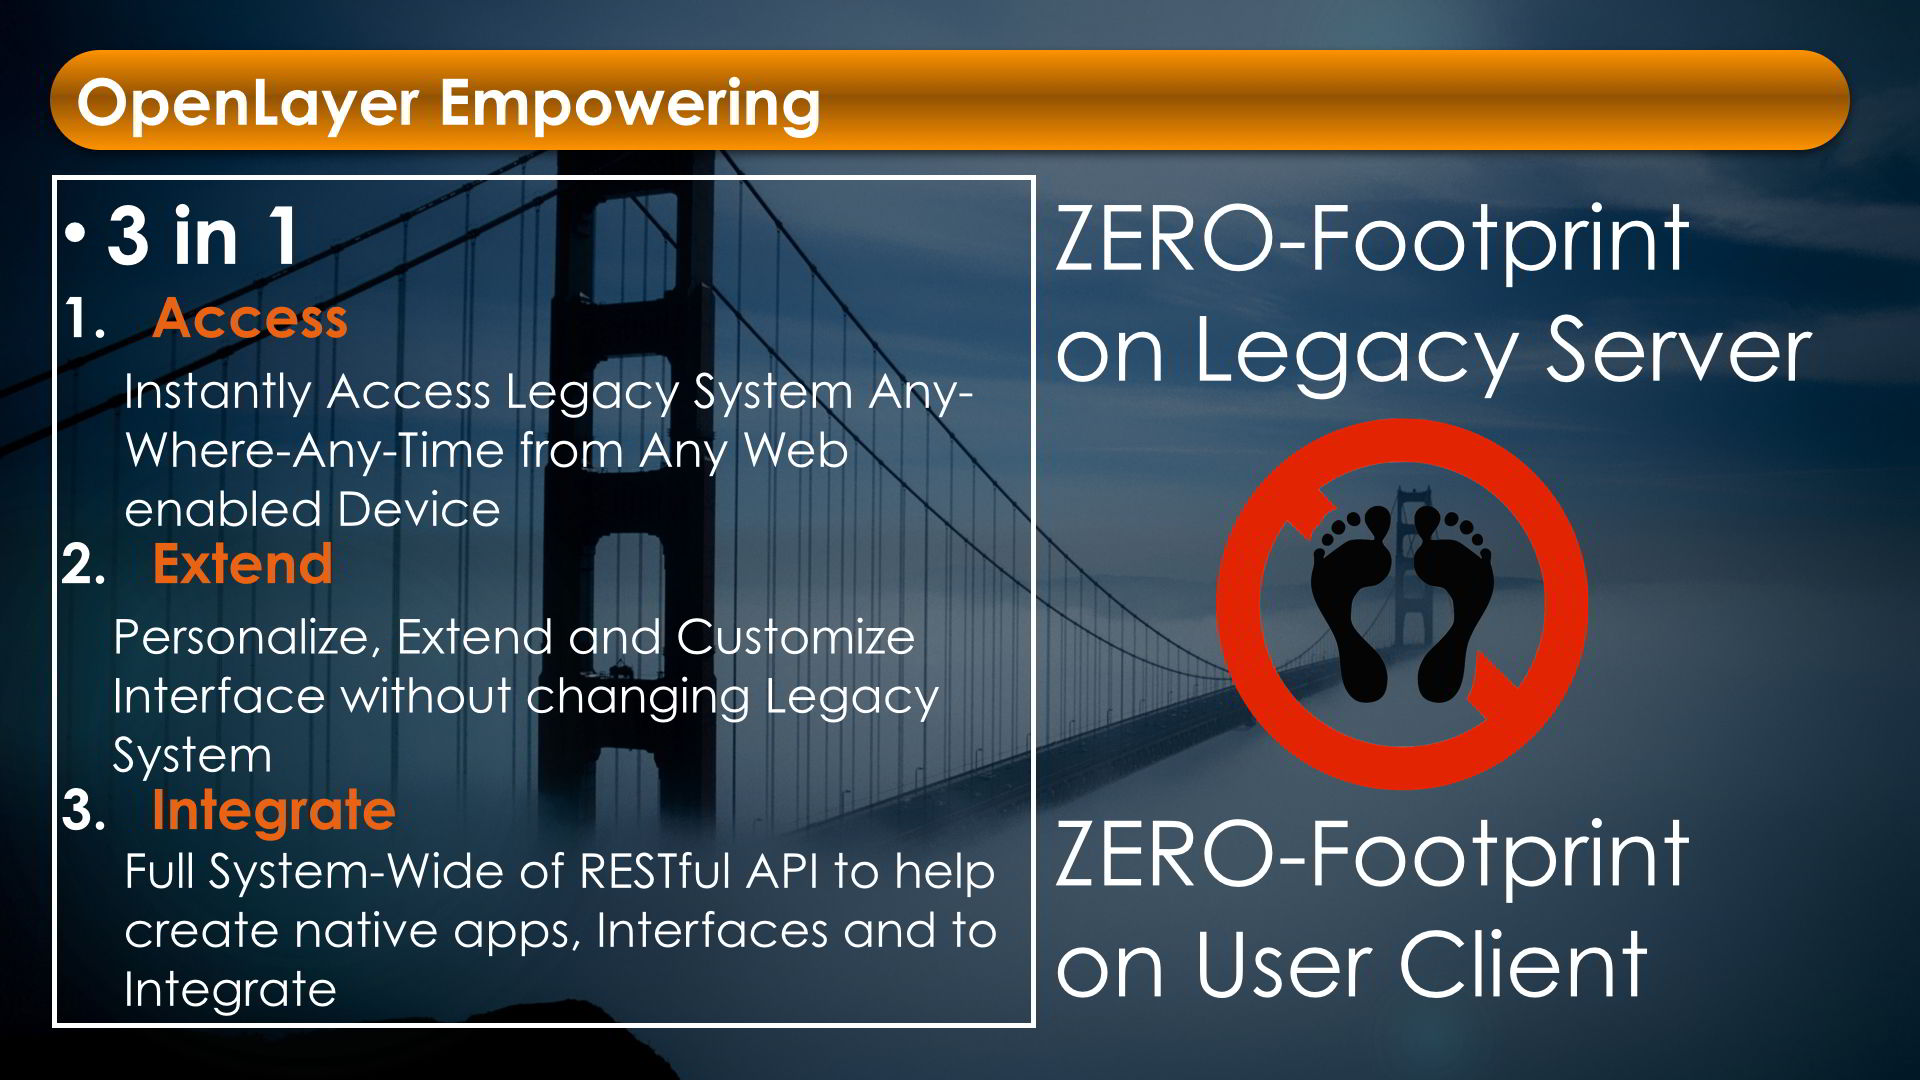 OpenLayer, Zero Footprint on Legacy Server